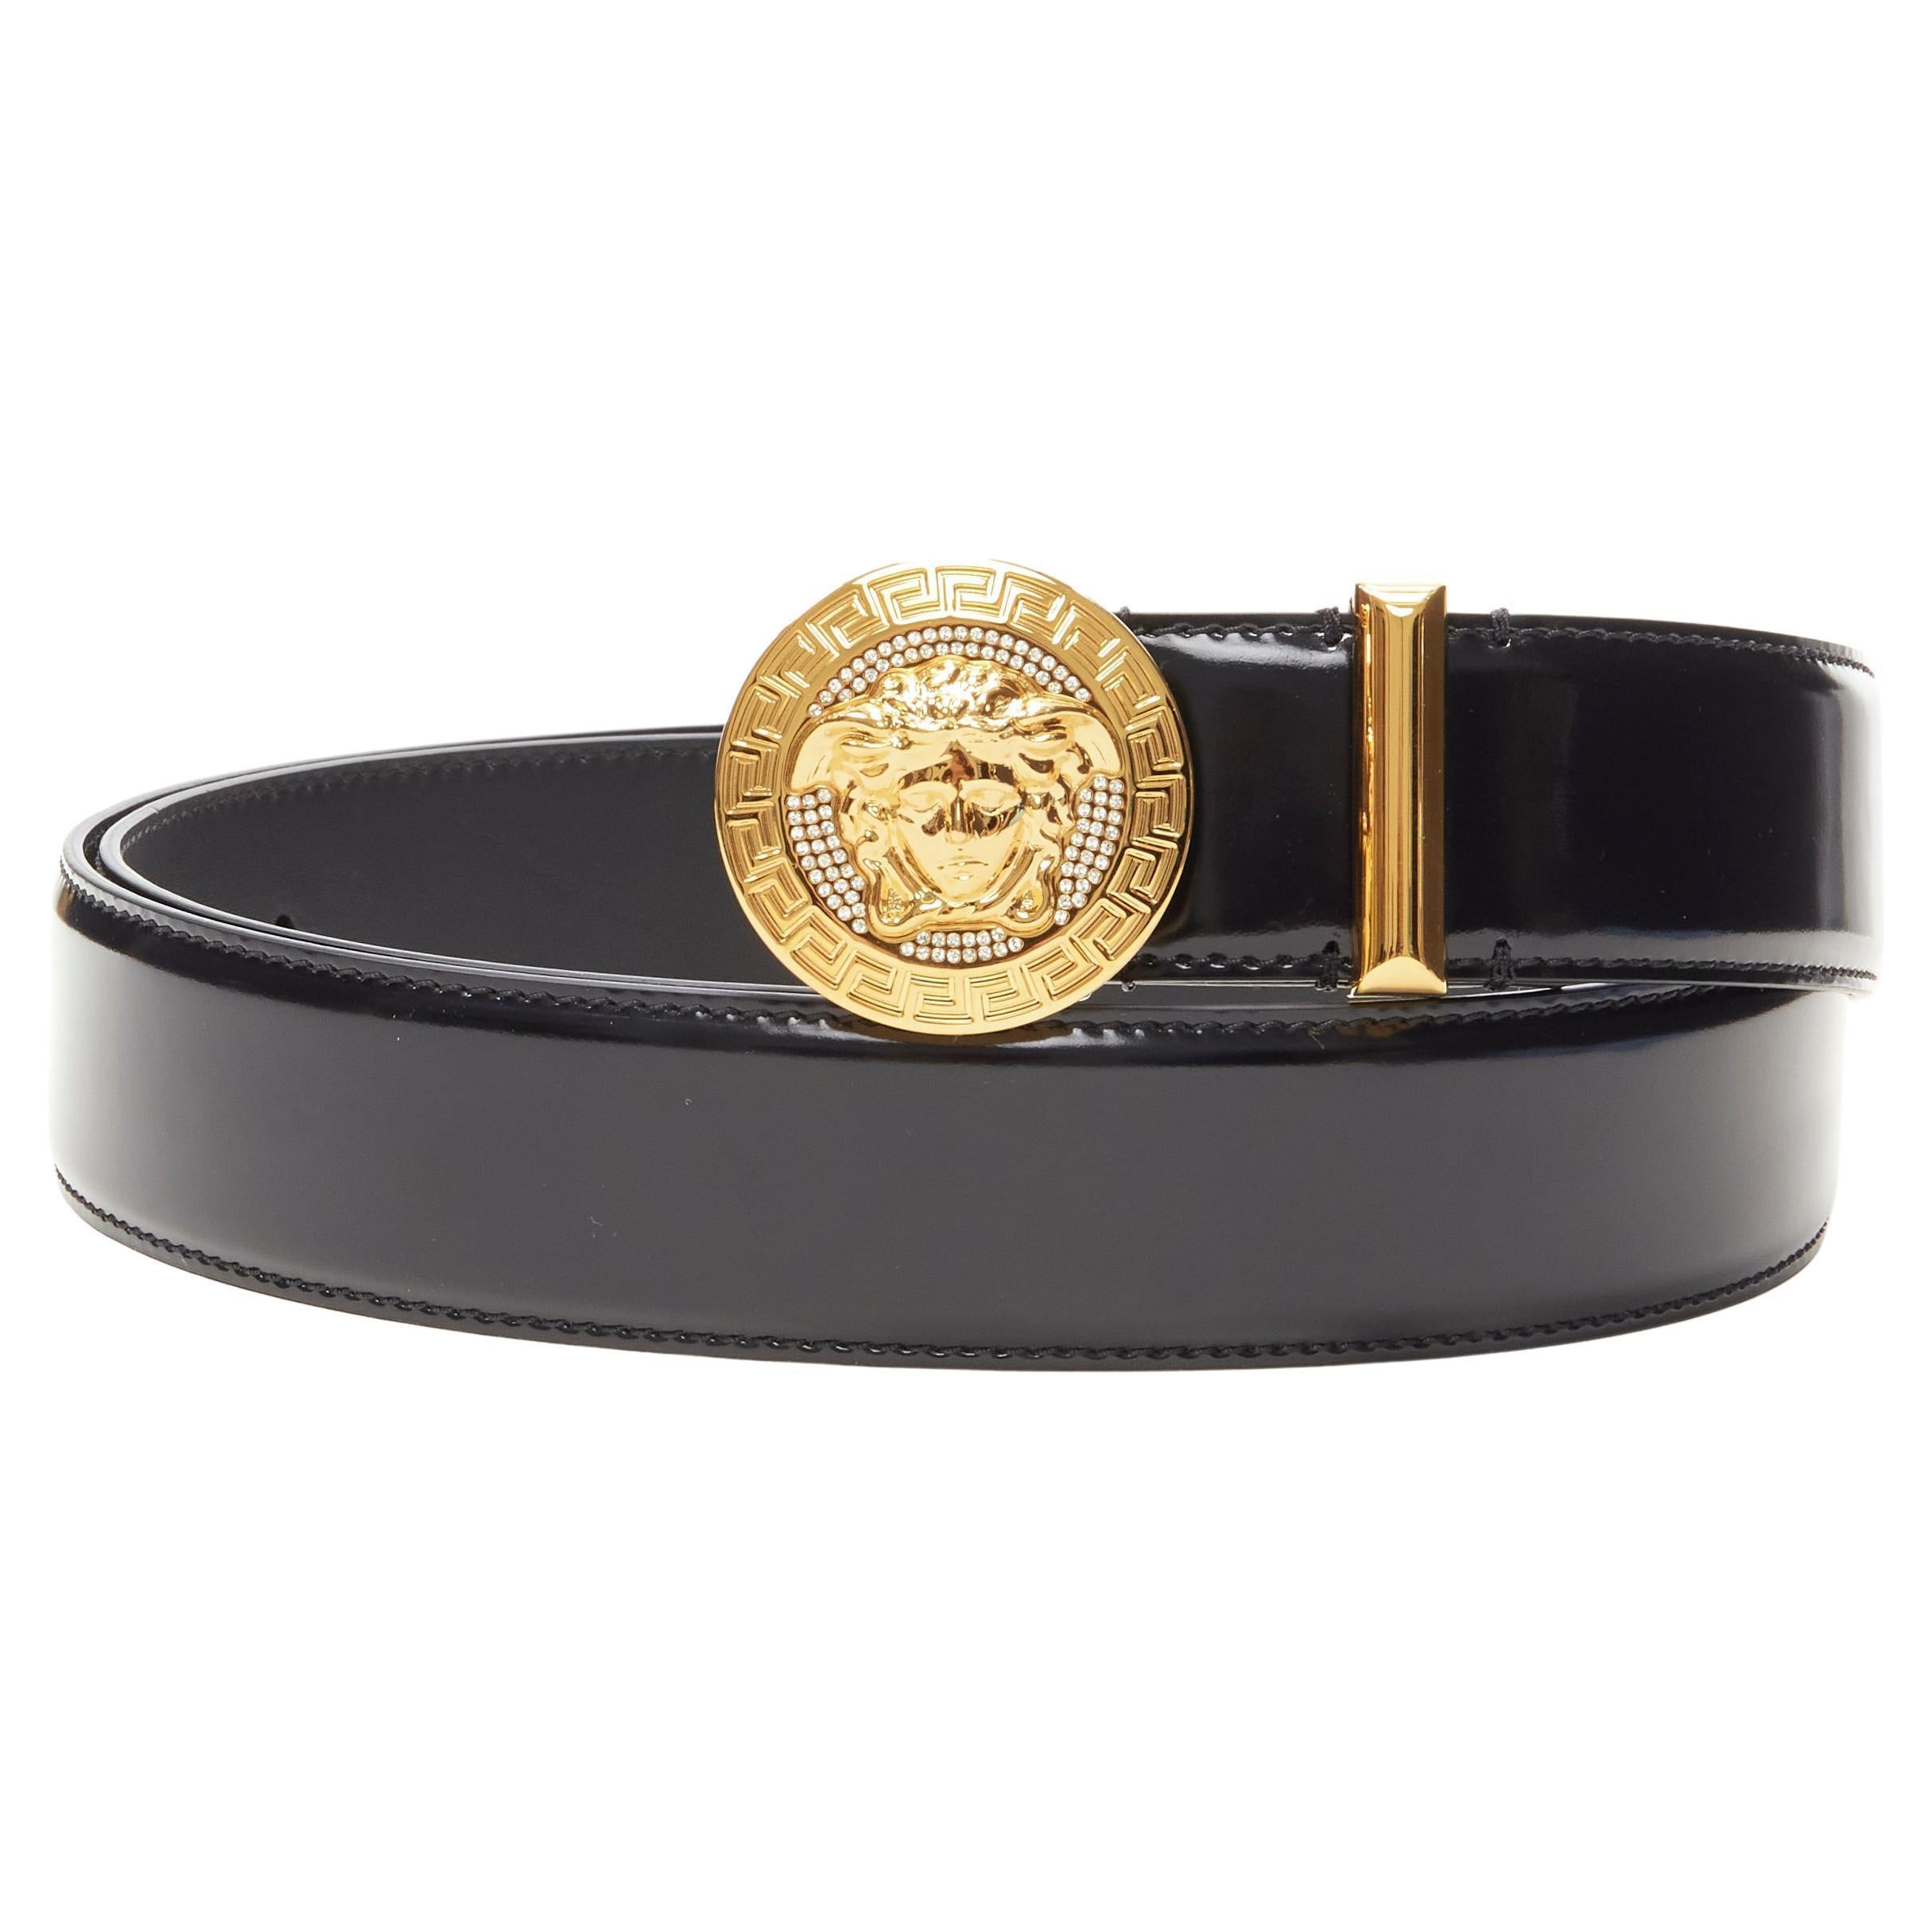 new VERSACE Medusa Biggie crystal gold Medallion coin leather belt 110cm 42-46"